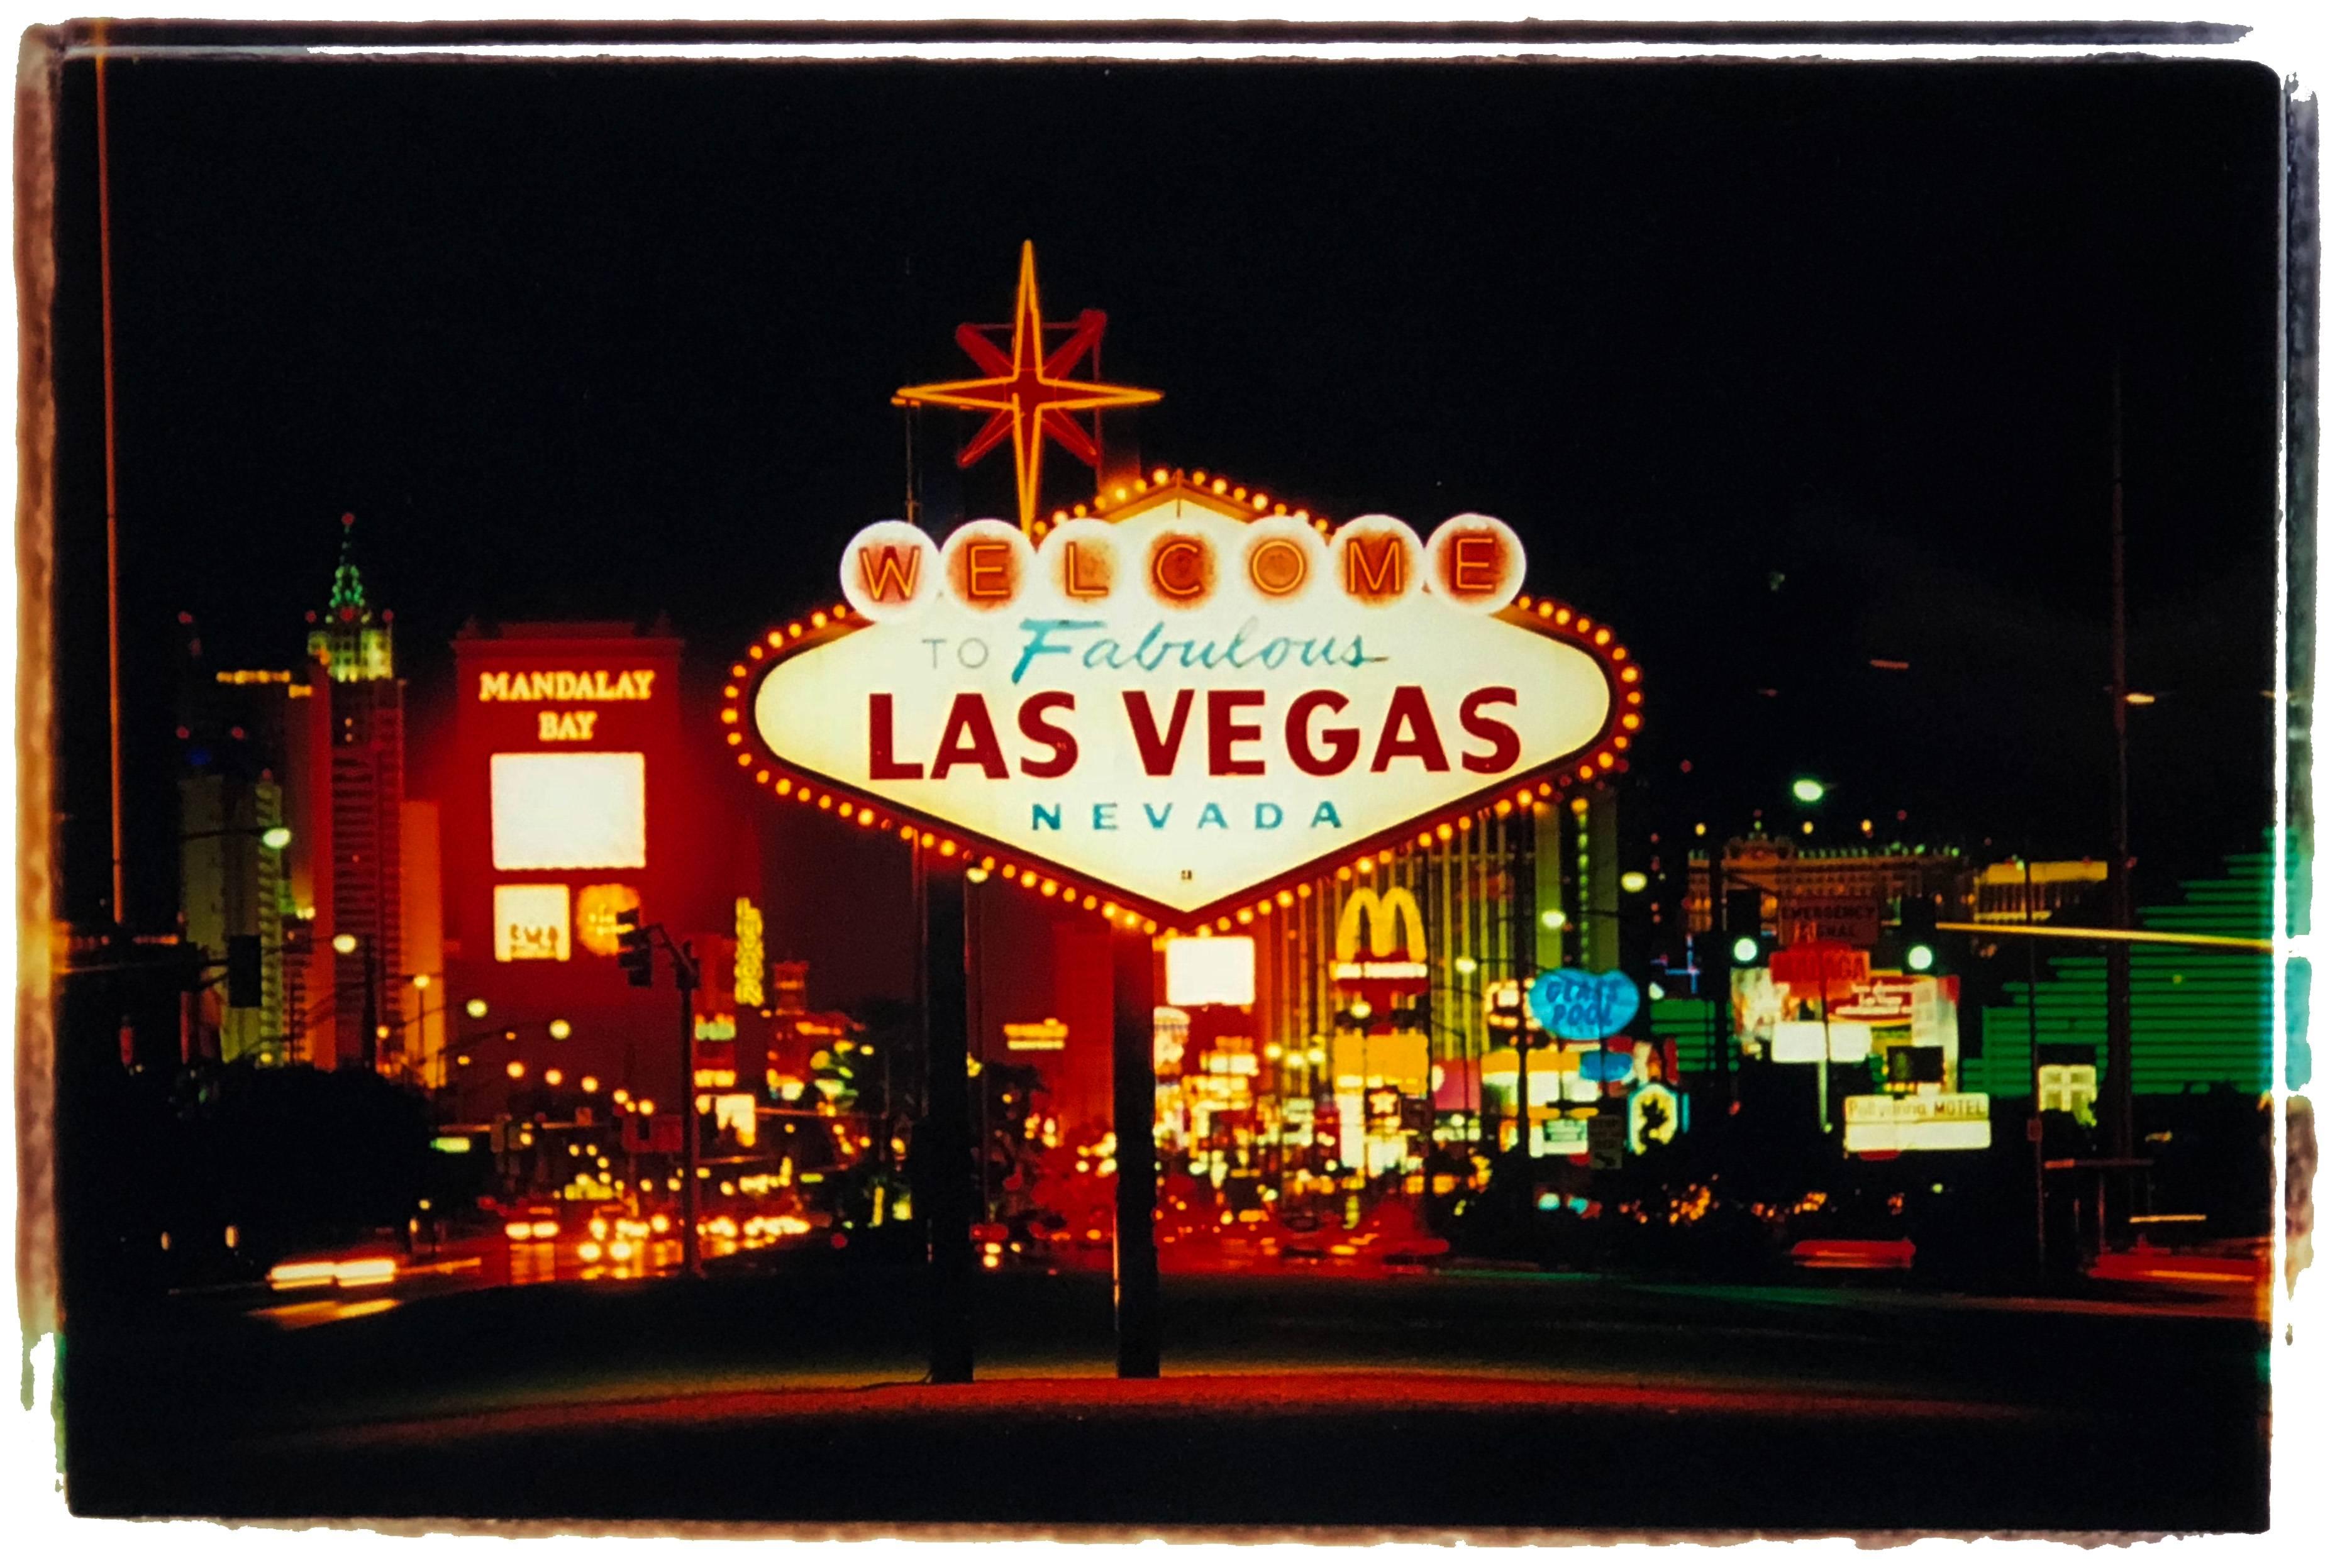 Richard Heeps Print – Arriving, Las Vegas – Farbfotografie mit amerikanischem Schild